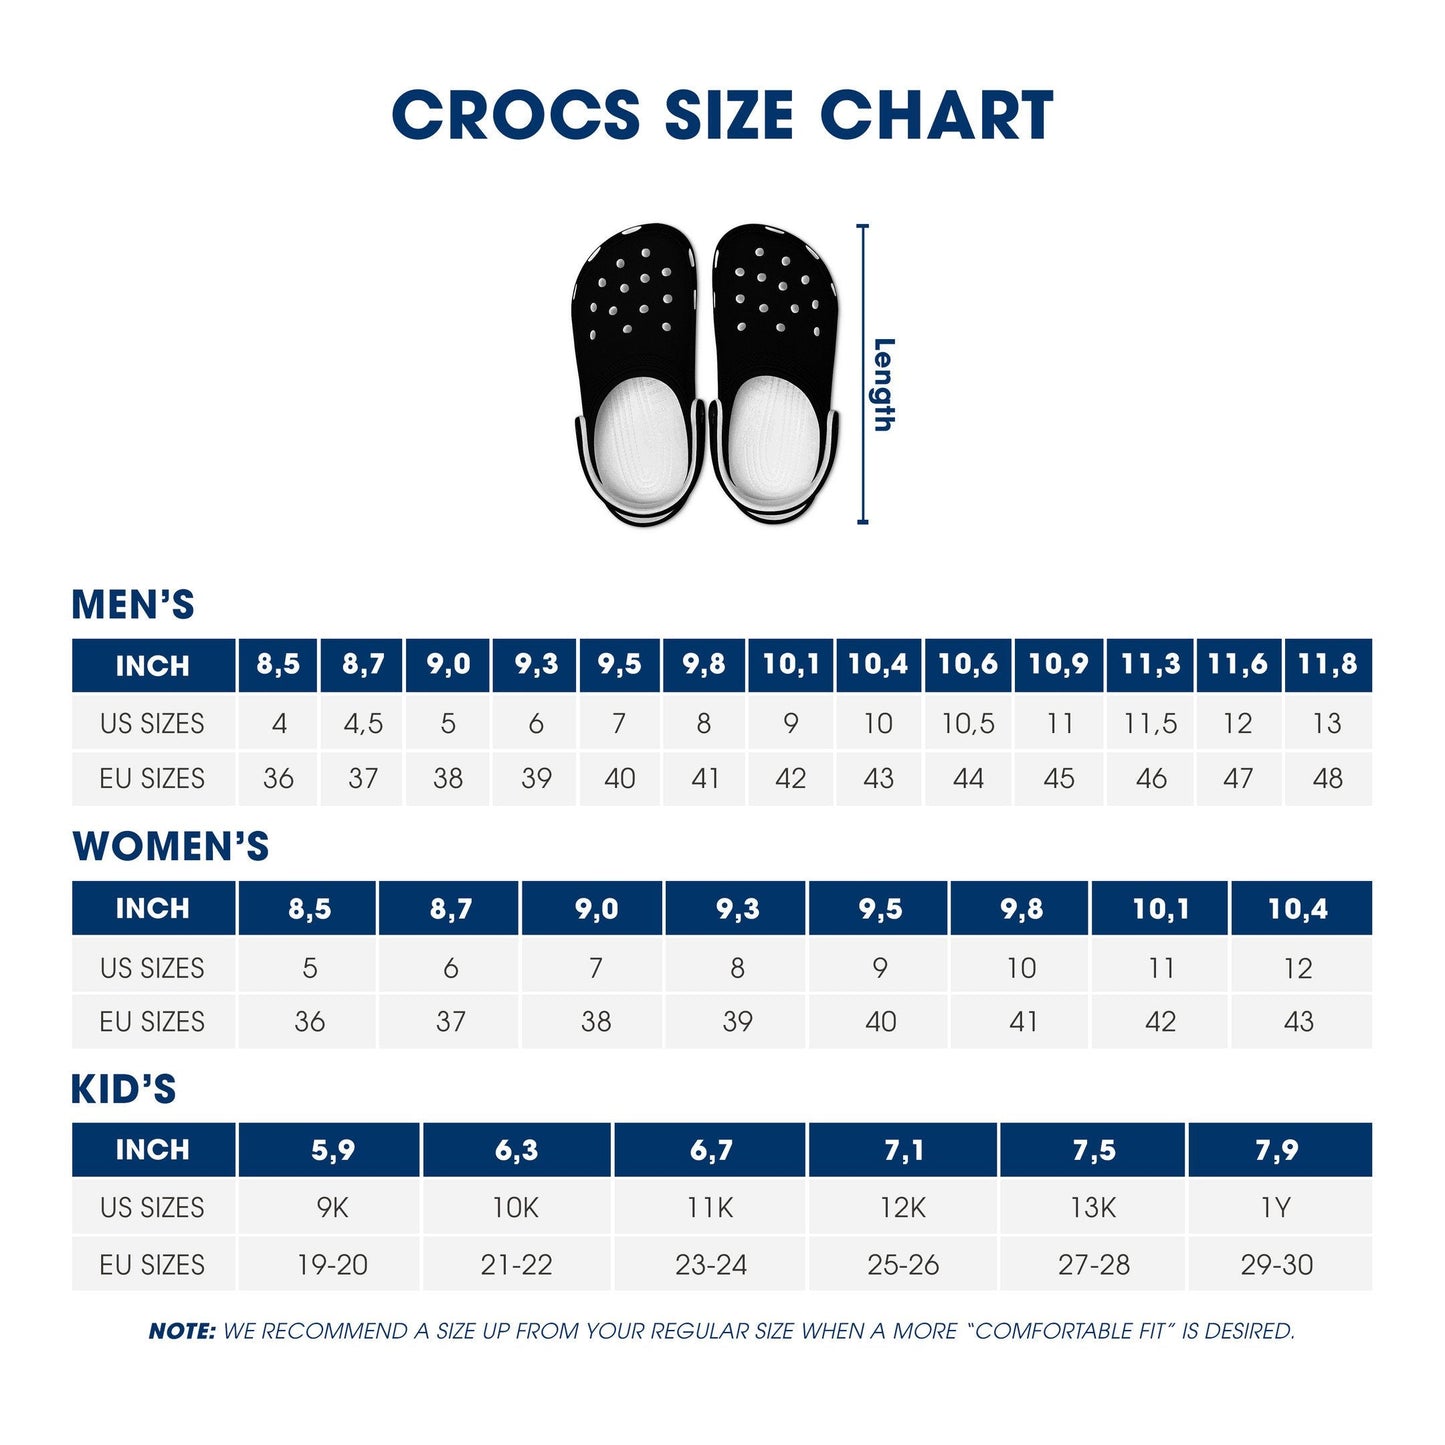 Basenji - 3D Graphic Custom Name Crocs Shoes